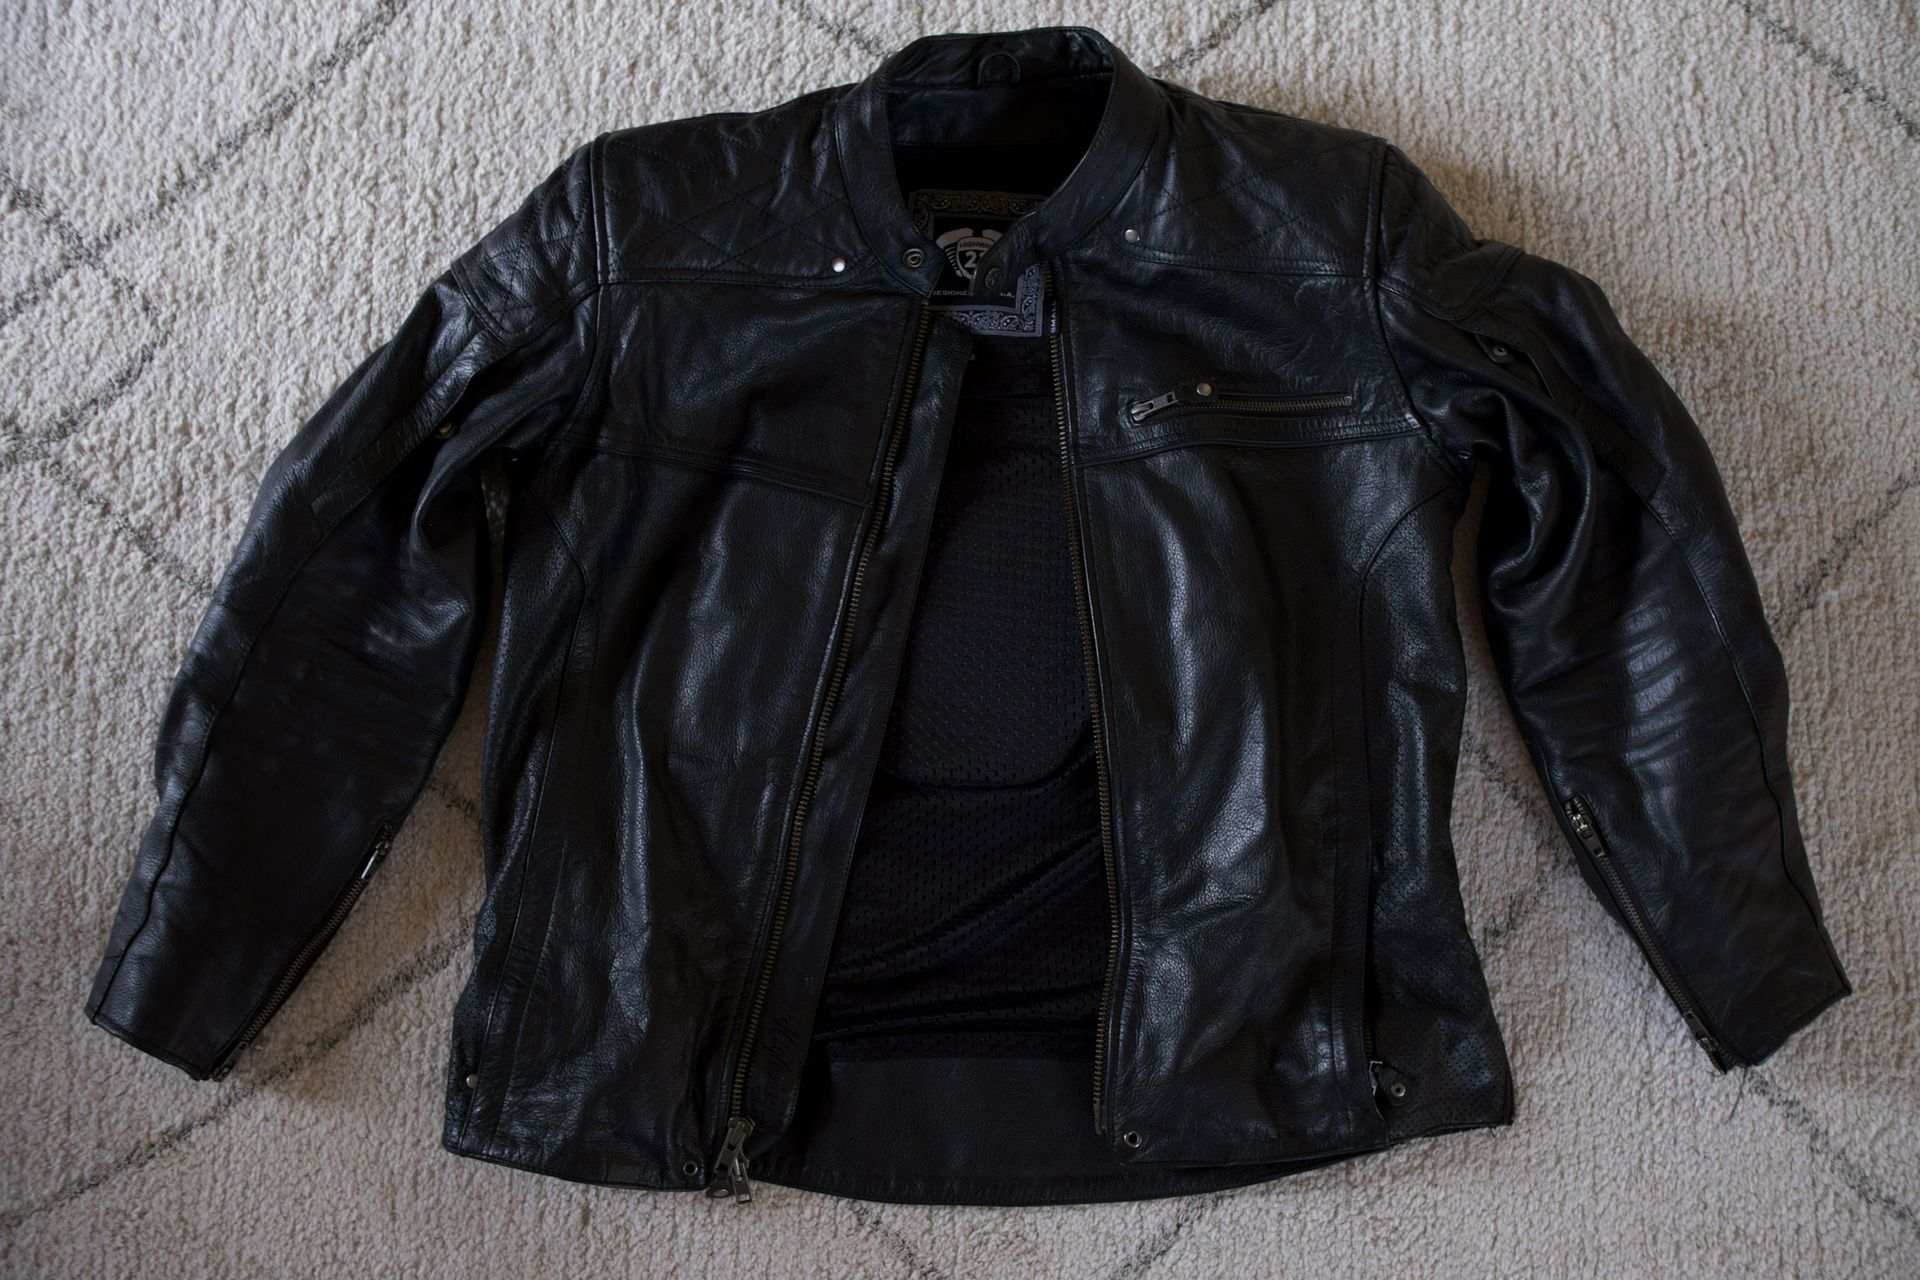 Highway21 Leather Motorcycle Jacket